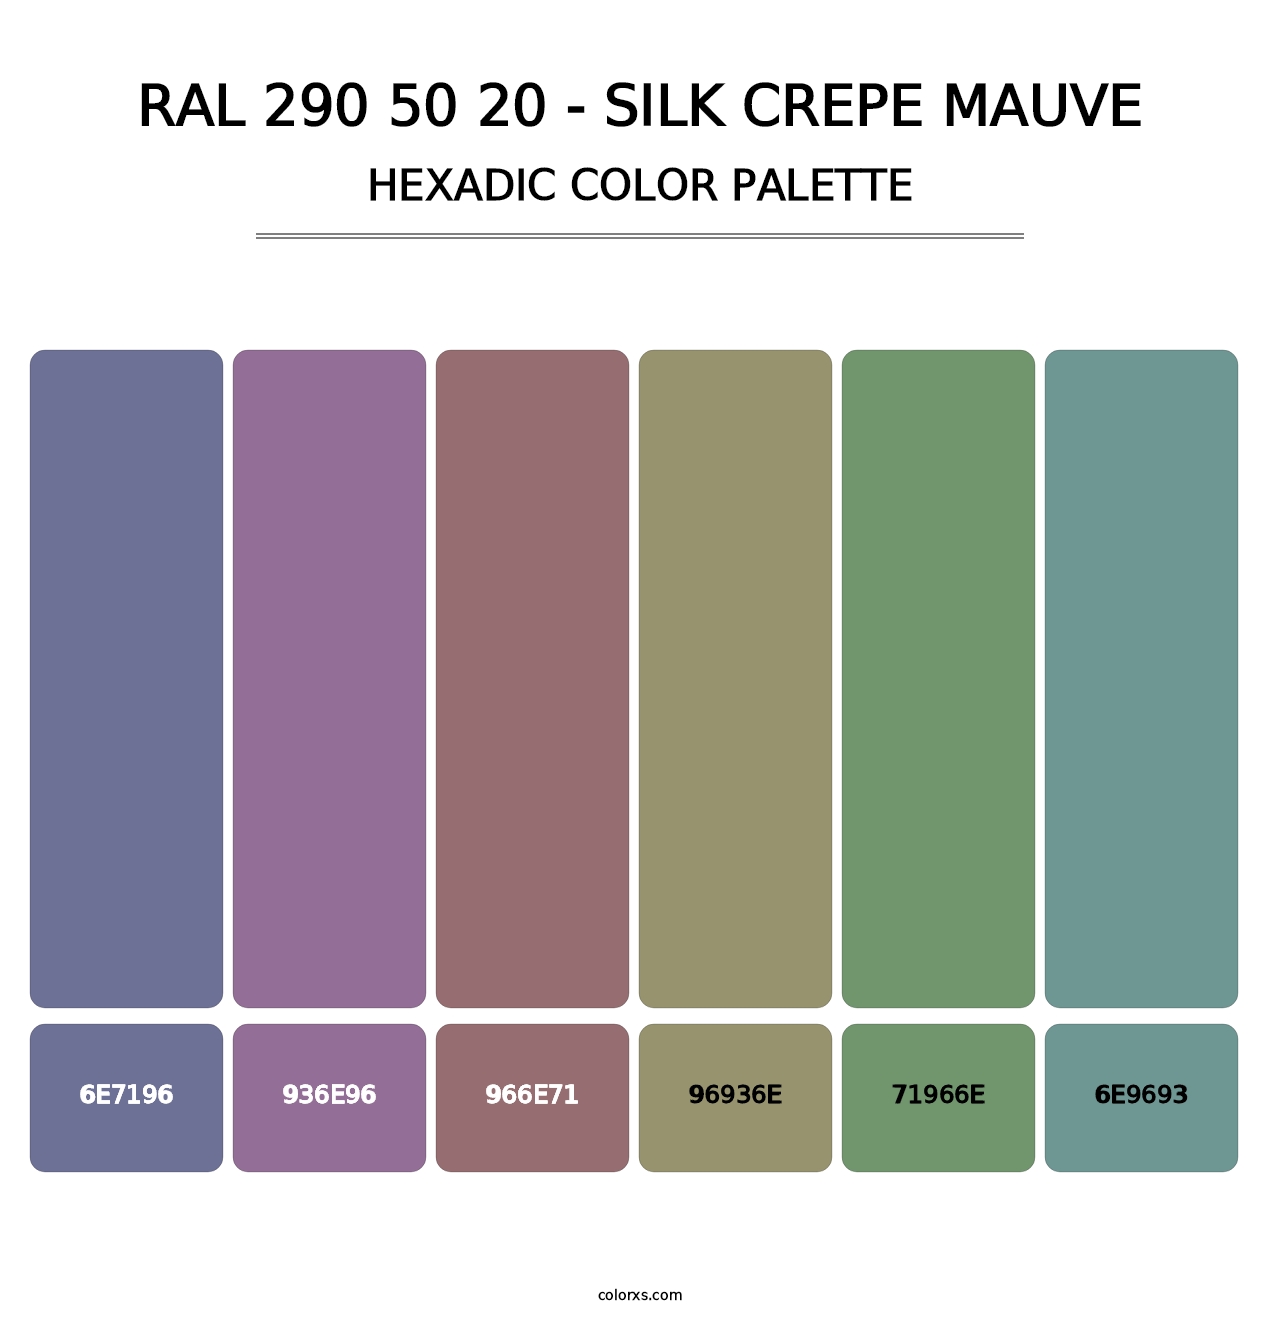 RAL 290 50 20 - Silk Crepe Mauve - Hexadic Color Palette